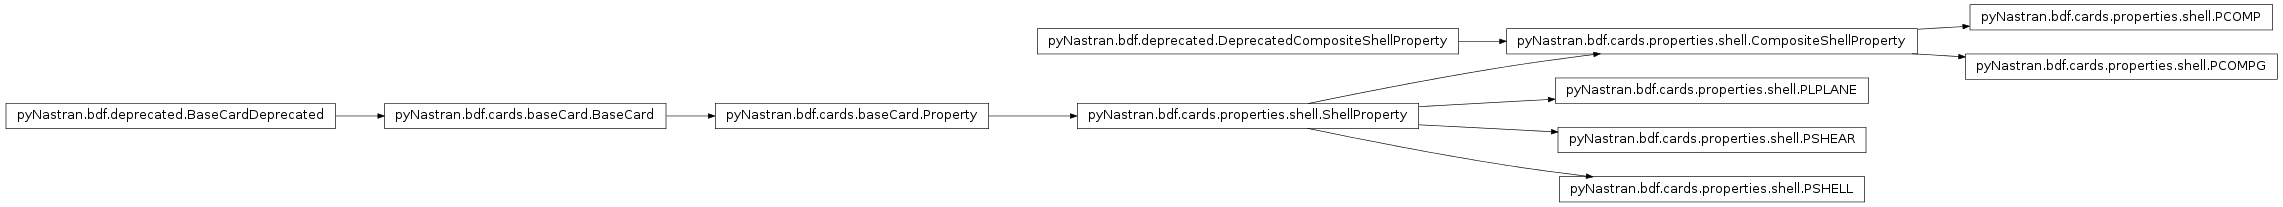 Inheritance diagram of pyNastran.bdf.cards.properties.shell